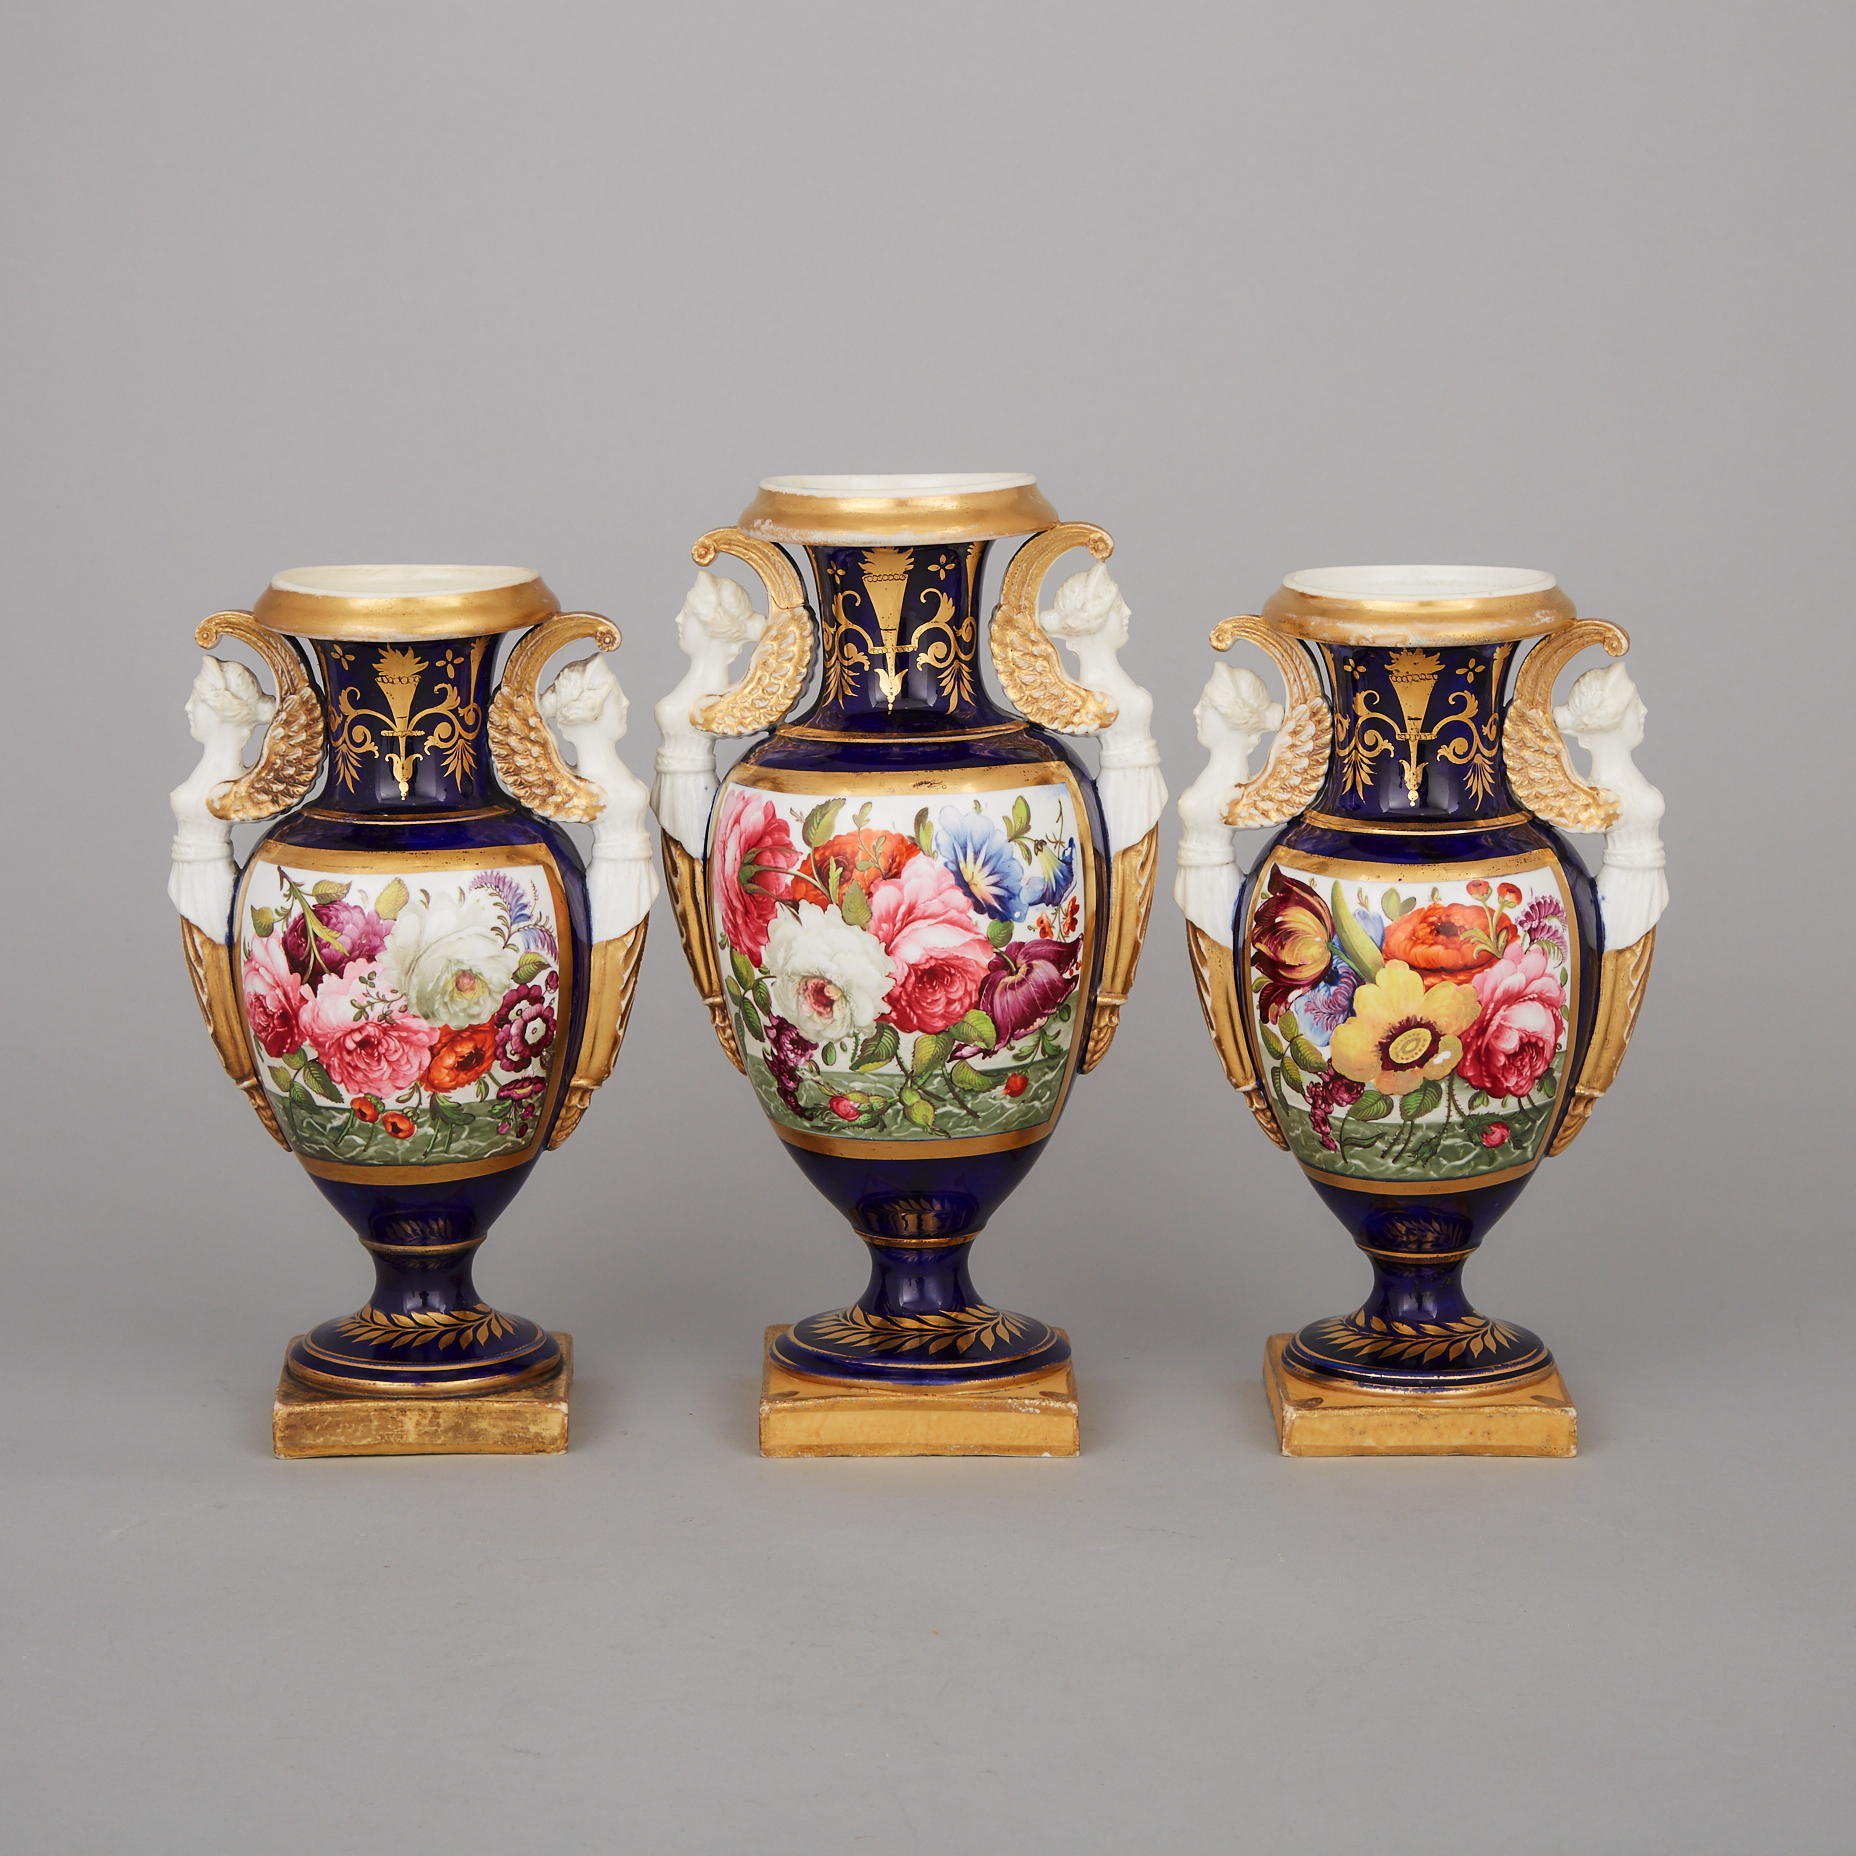 English Porcelain French Empire Style Garniture of Three Vases, c.1820